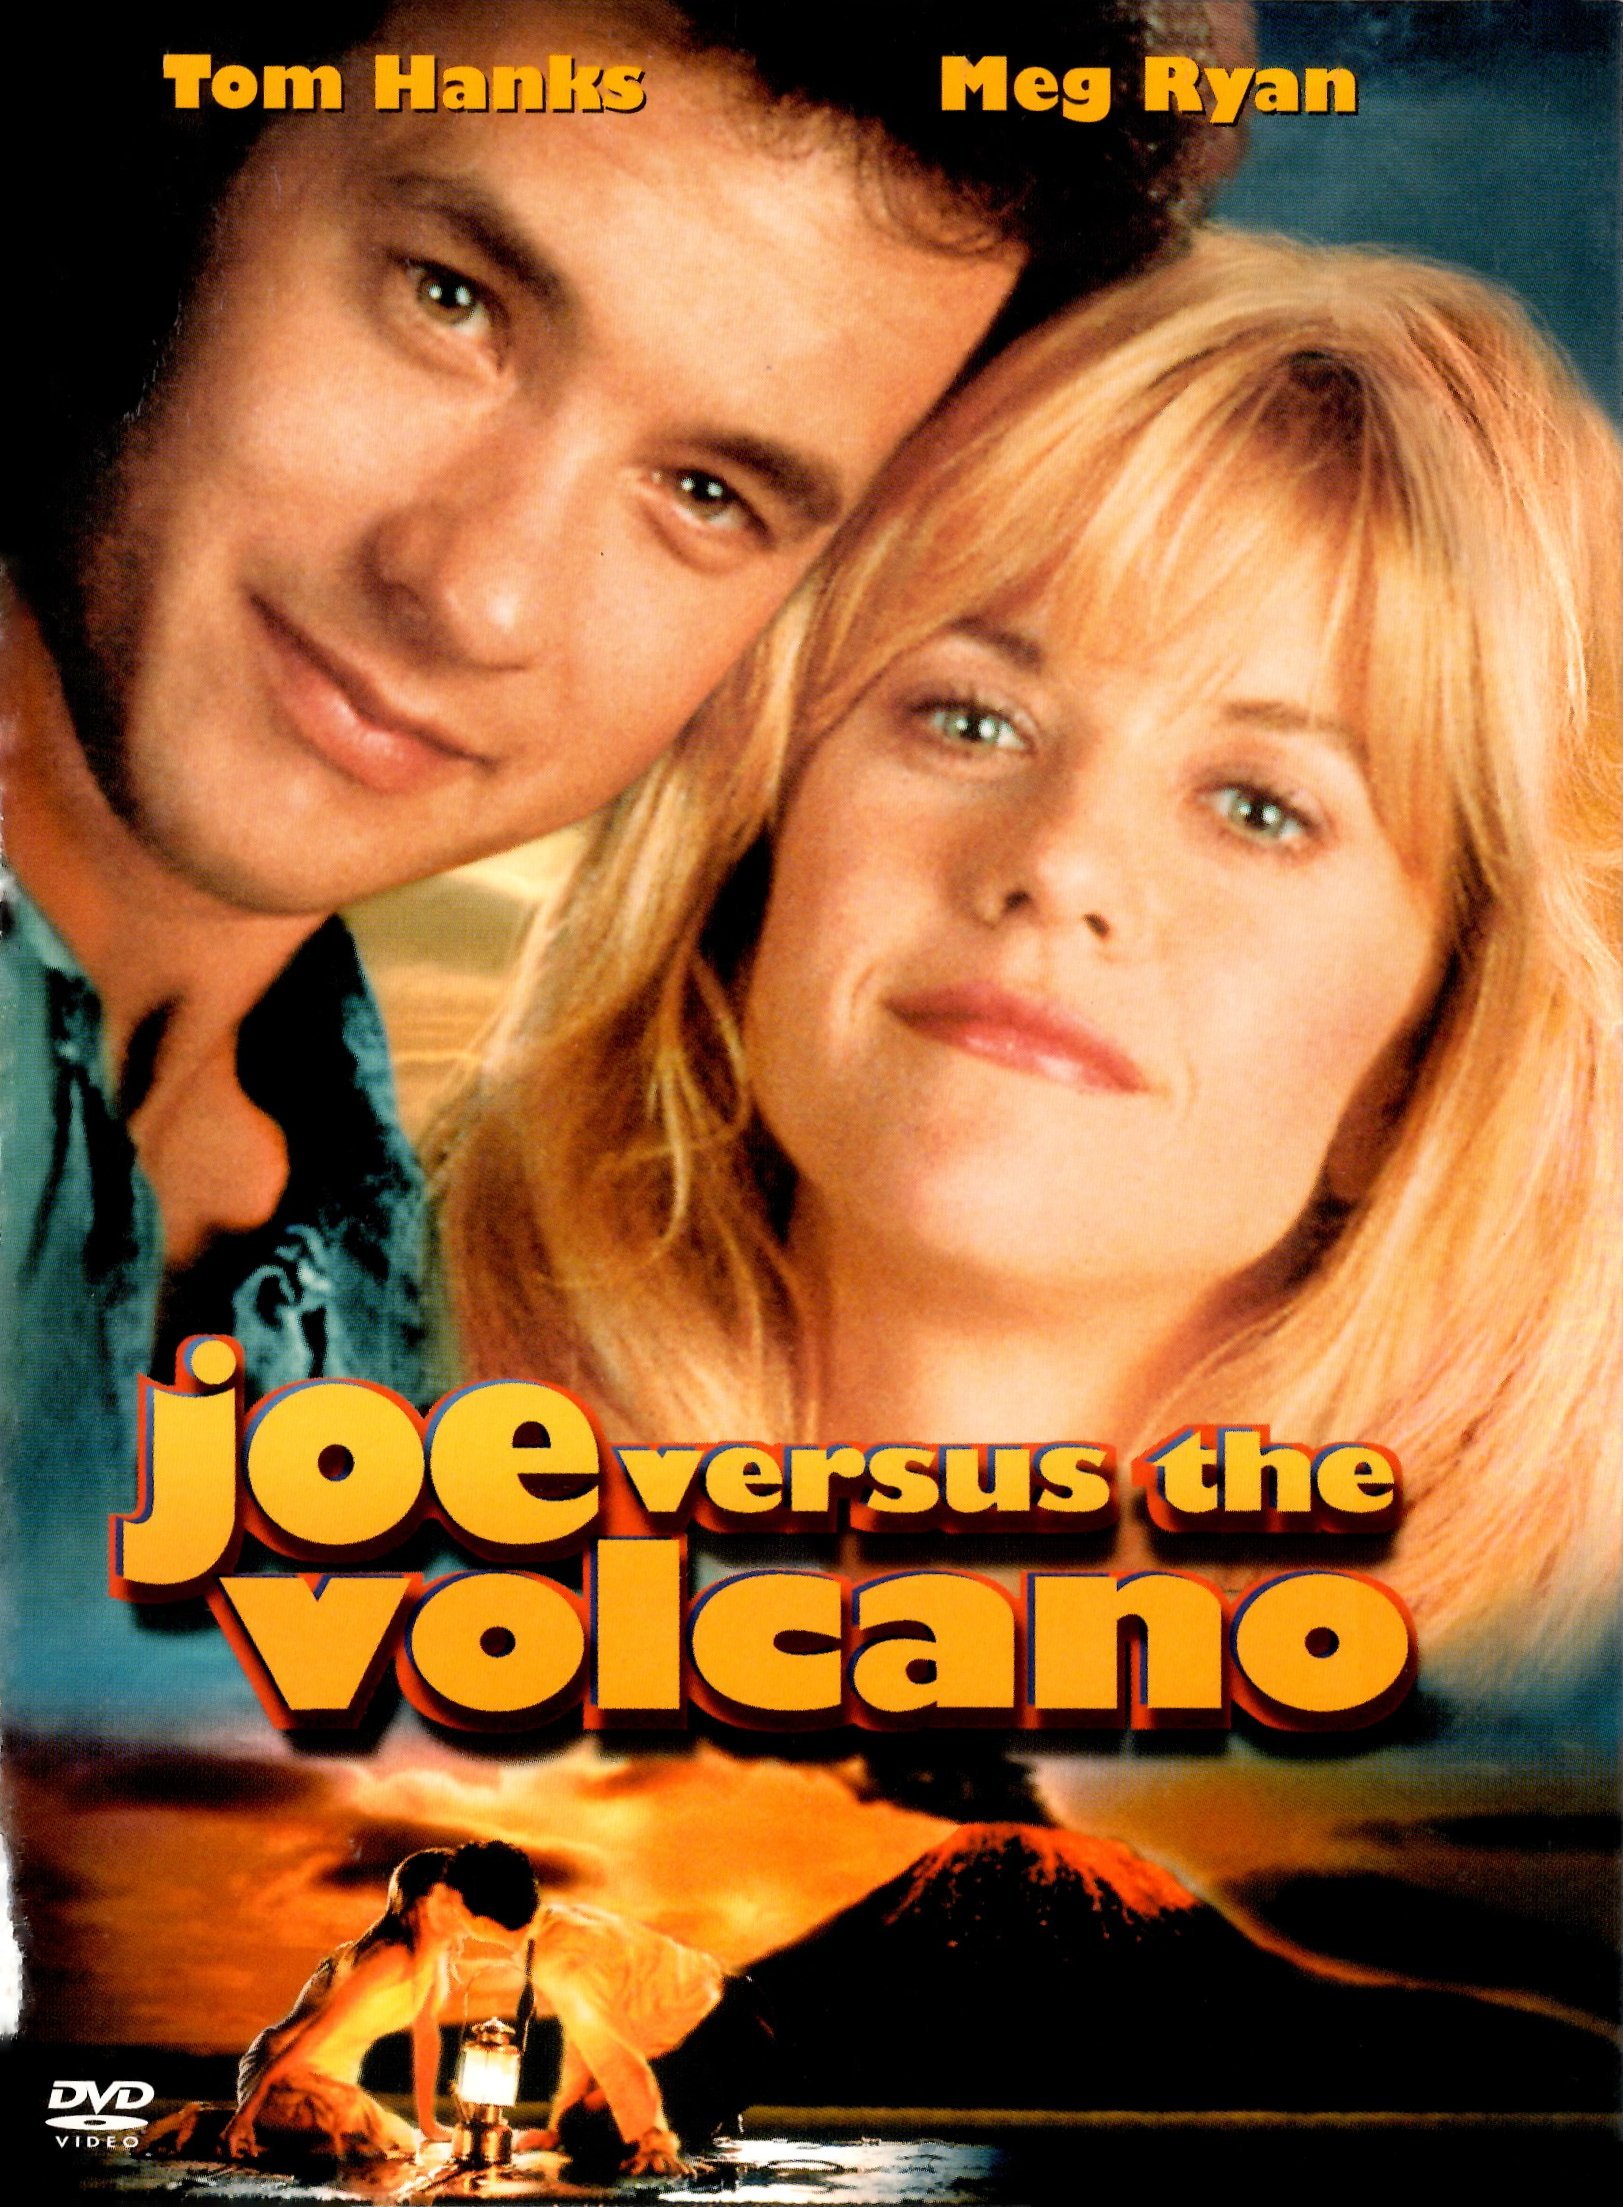 Joe vs the volcano steamer trunk